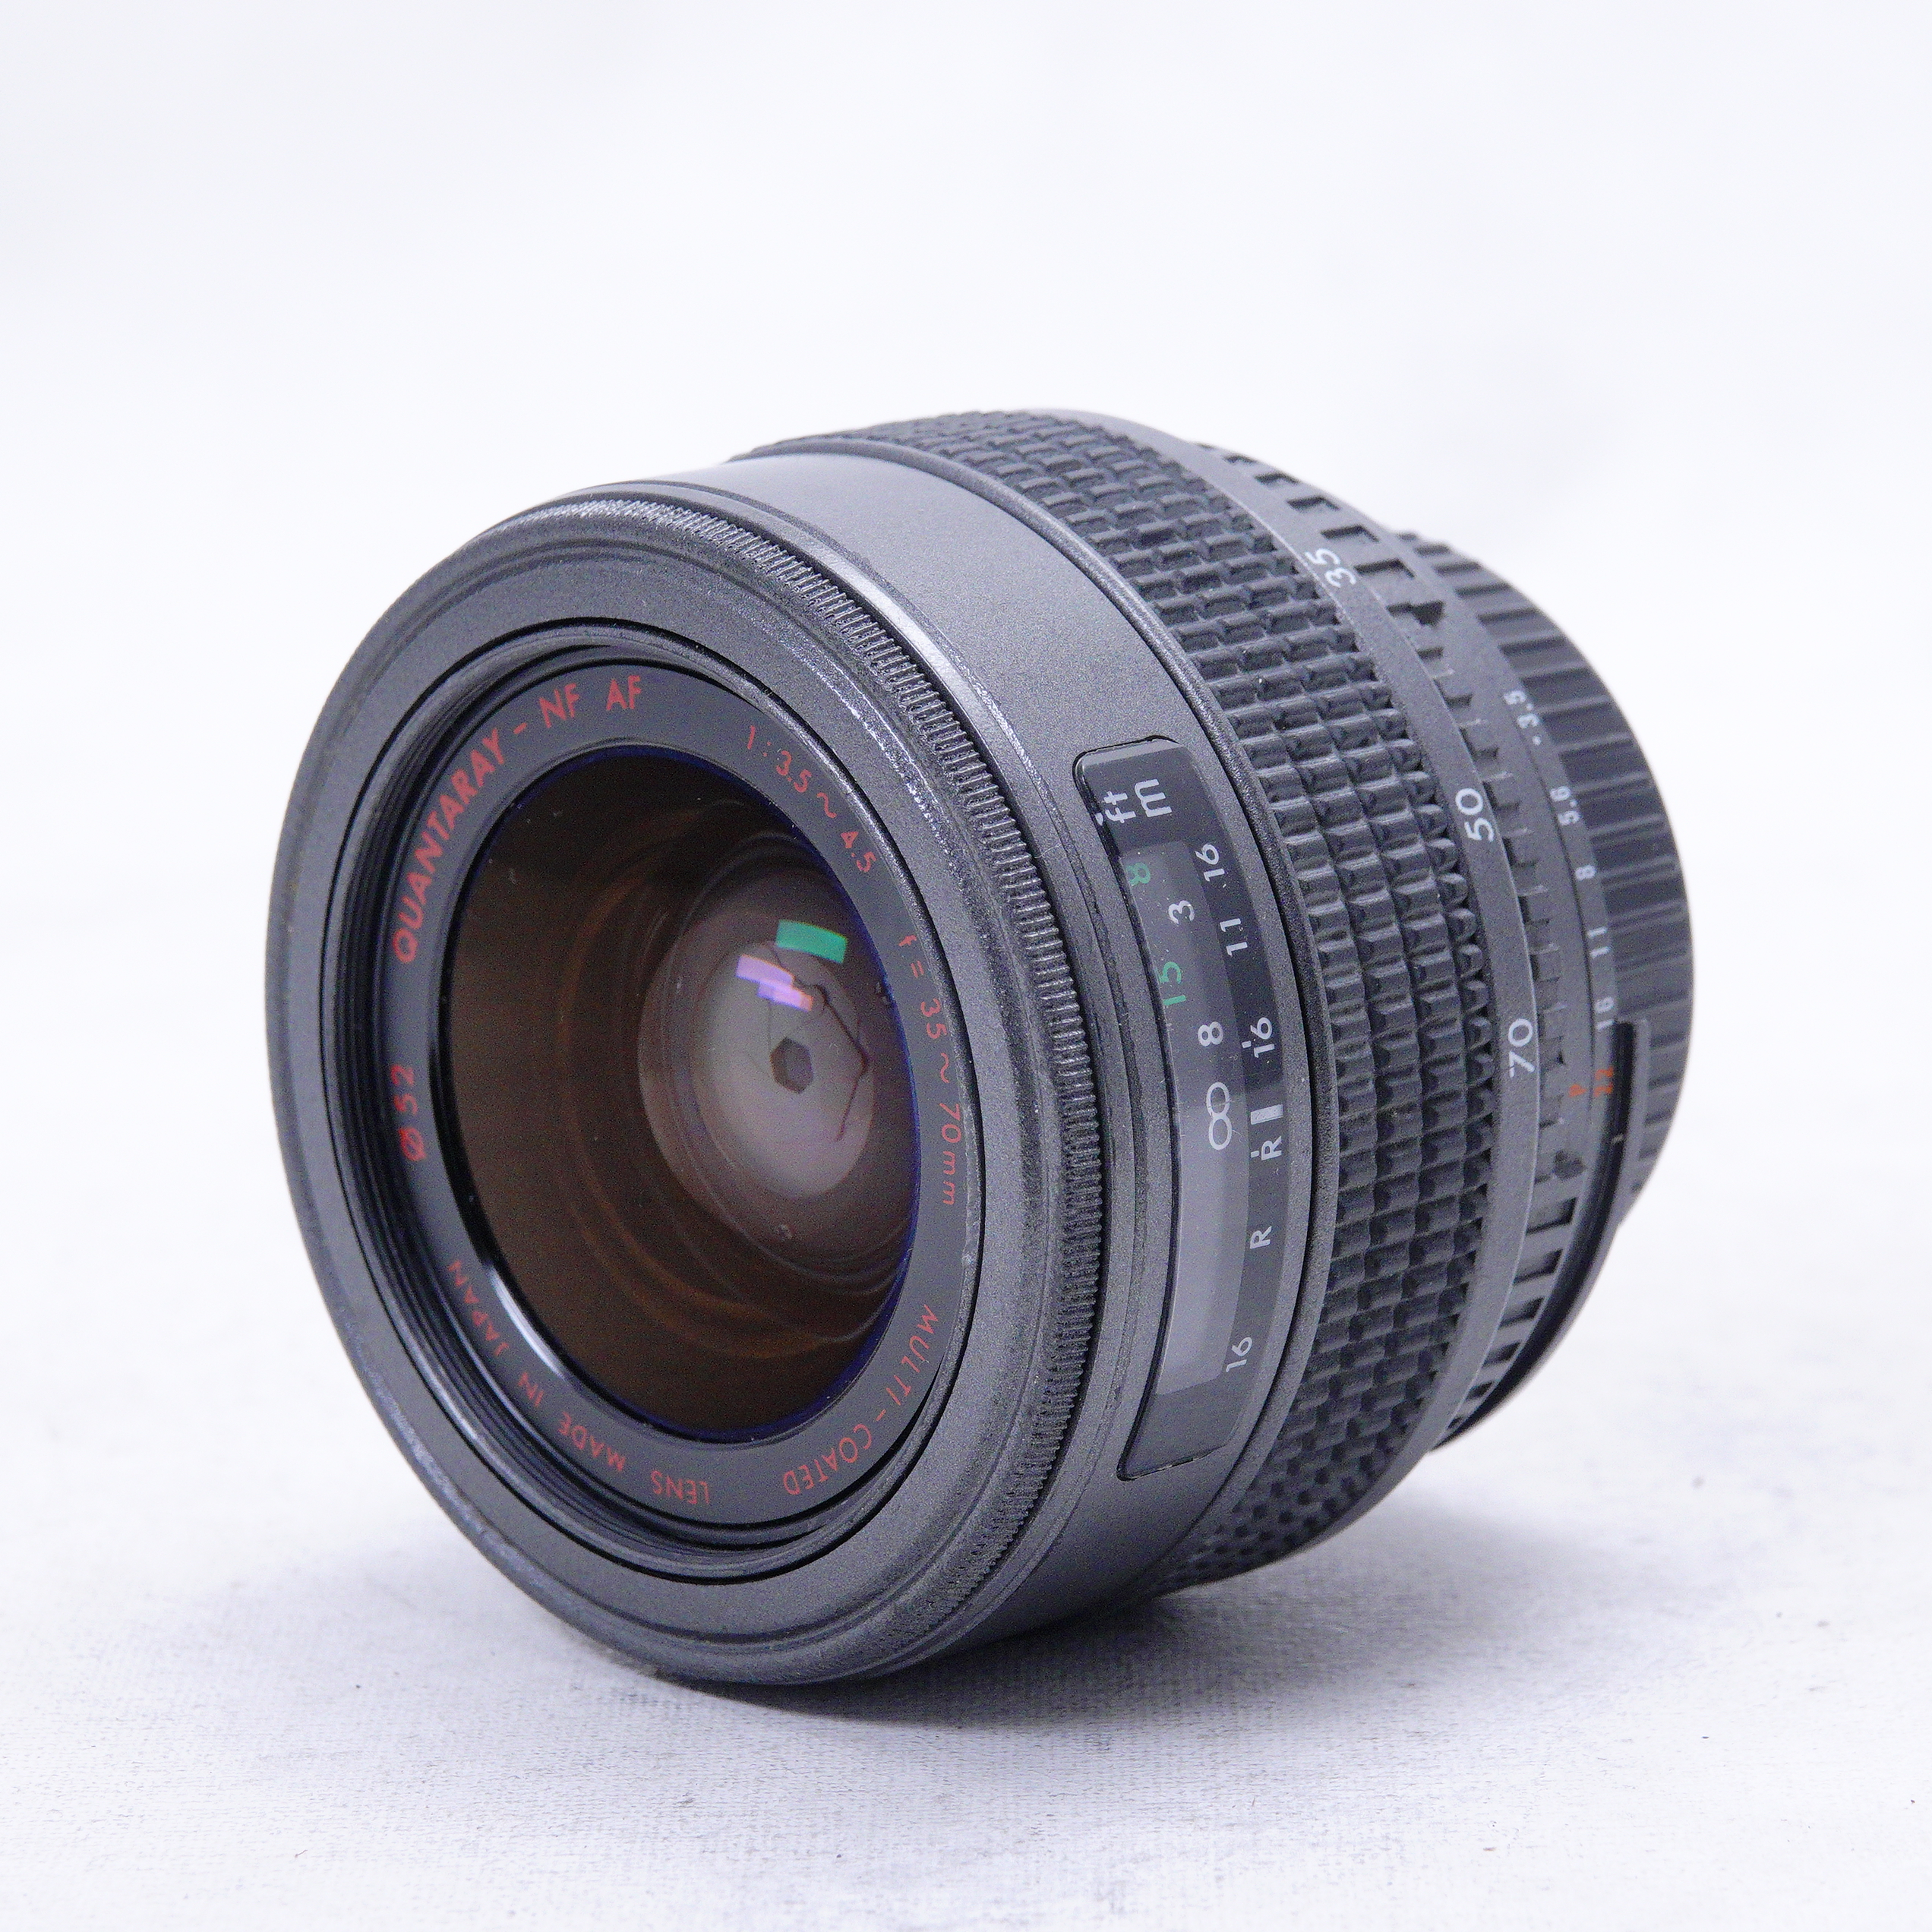  Zoom Quantaray NF AF 35-70mm f3.5-4.5 Multi Coated (Nikon F) - Usado